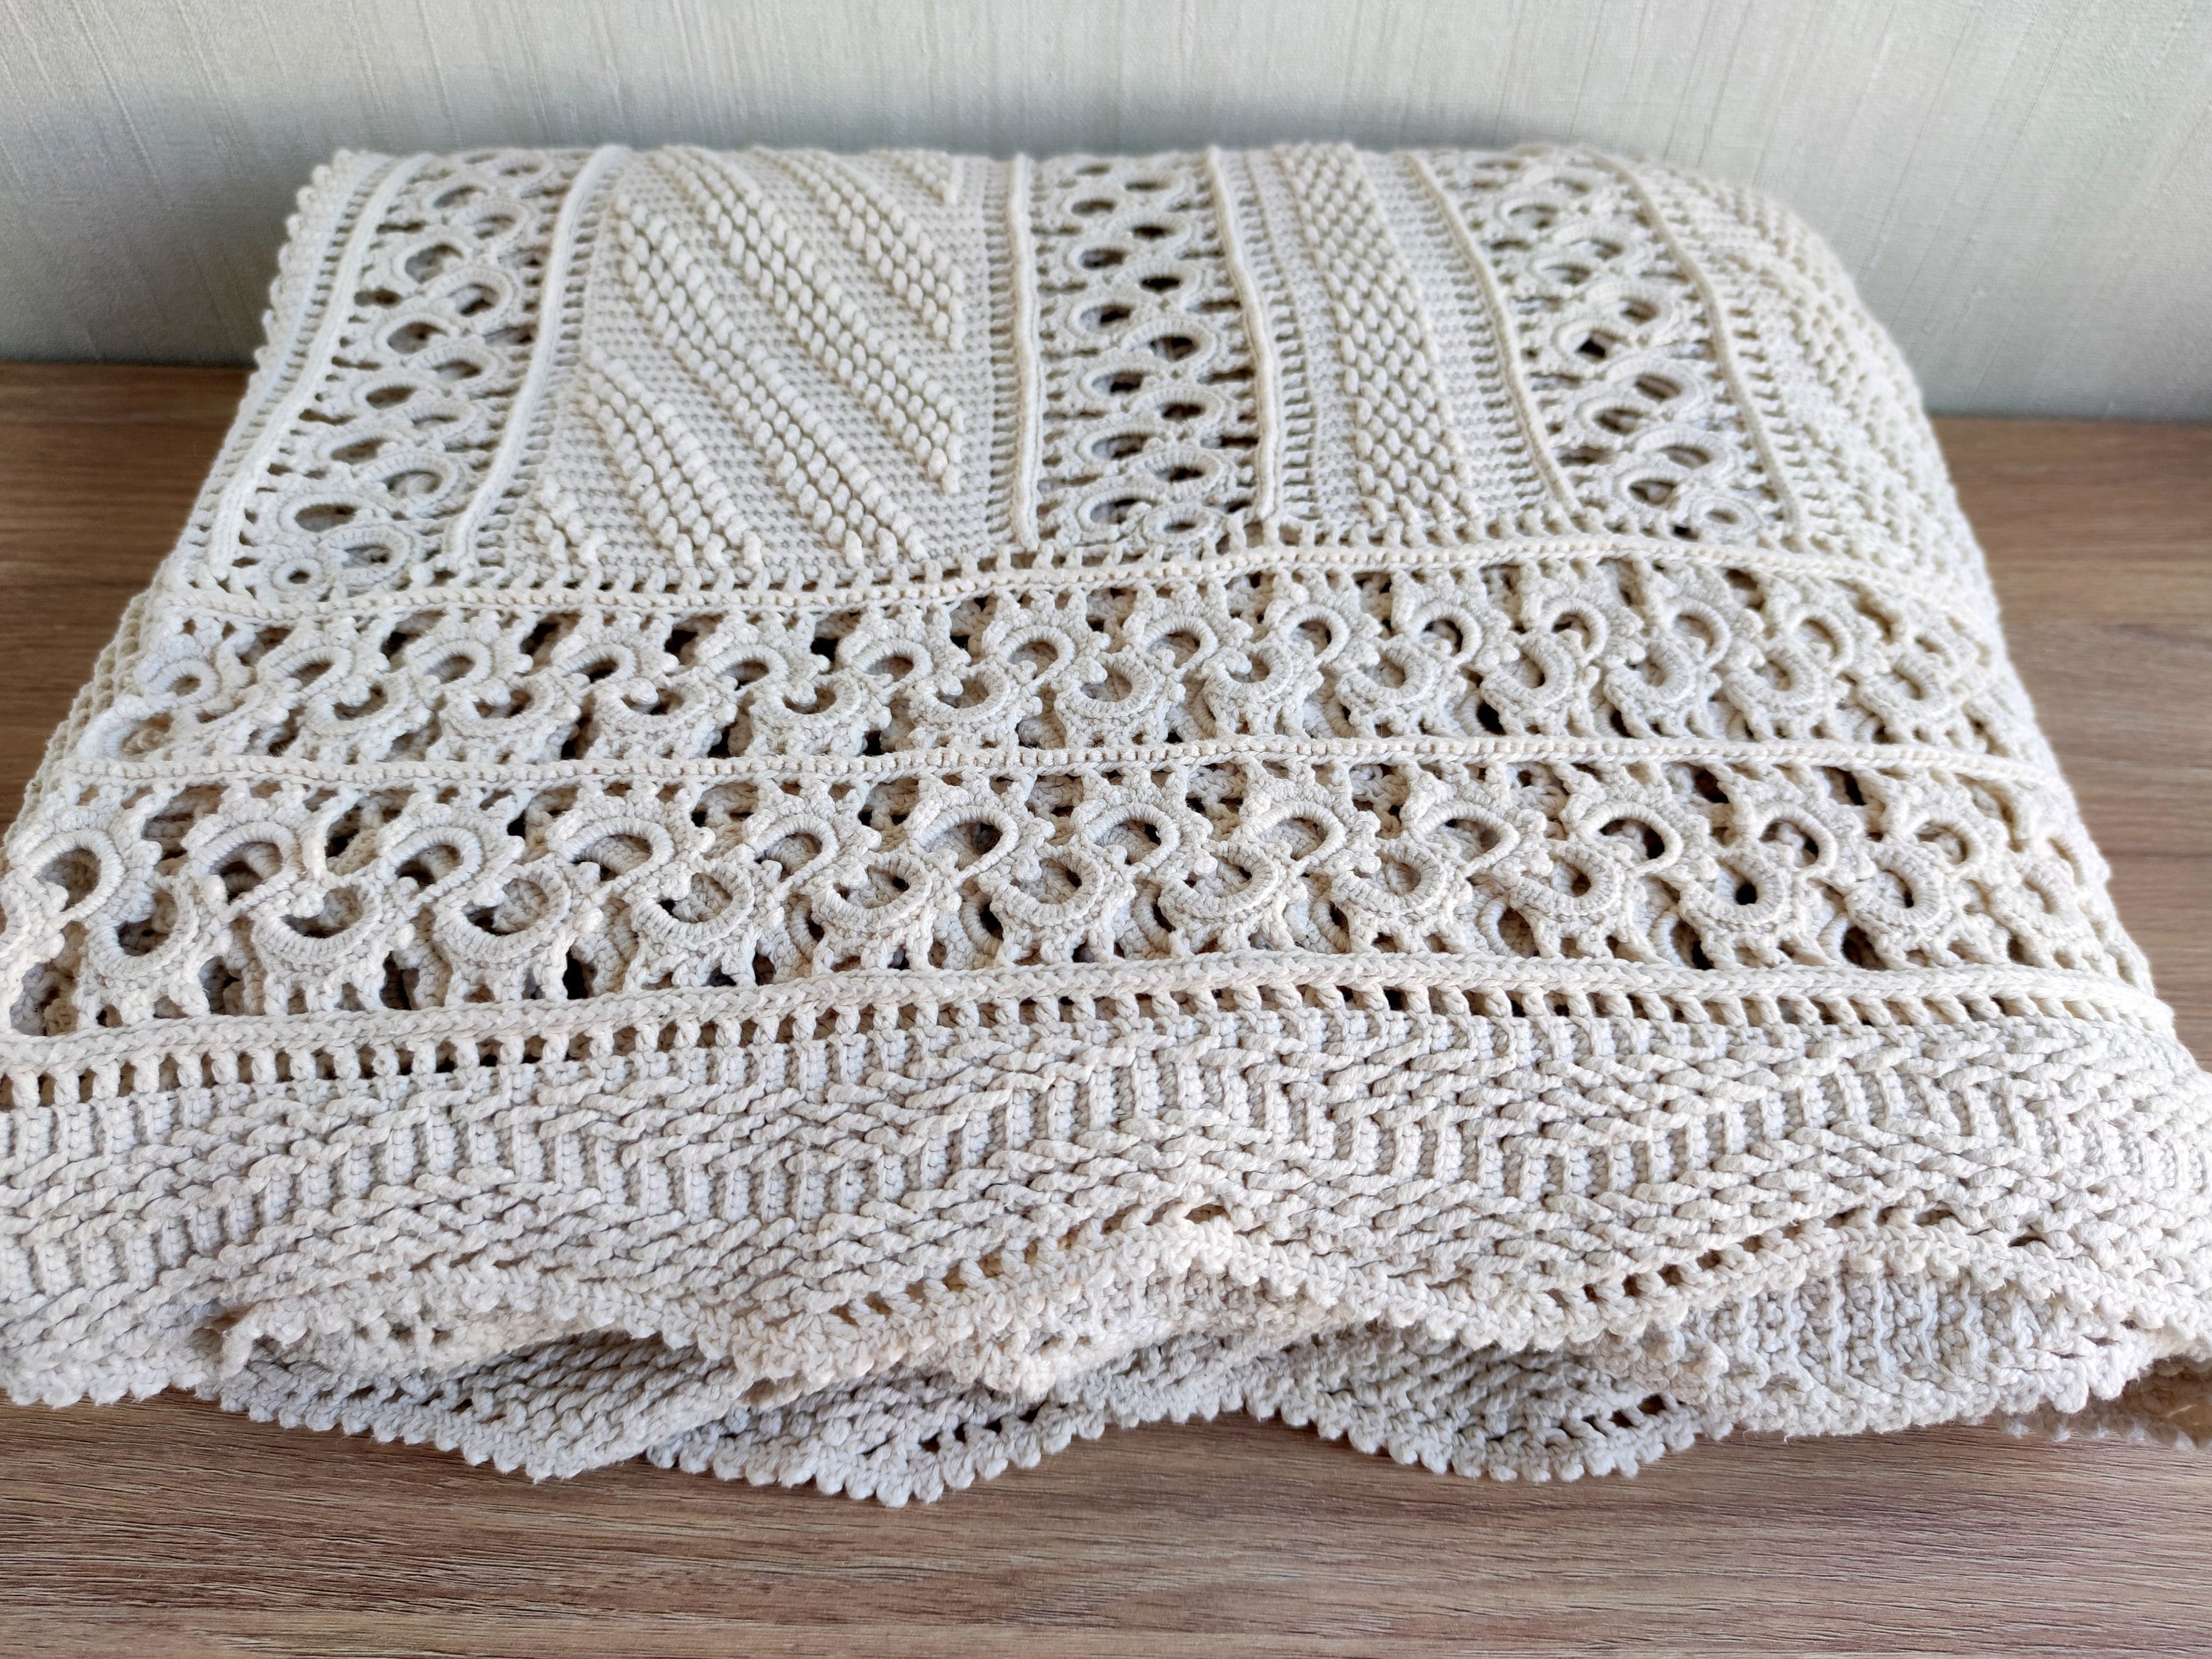 Rustic Cotton Trundle Bed Handmade Crochet Bedspread. Crochet